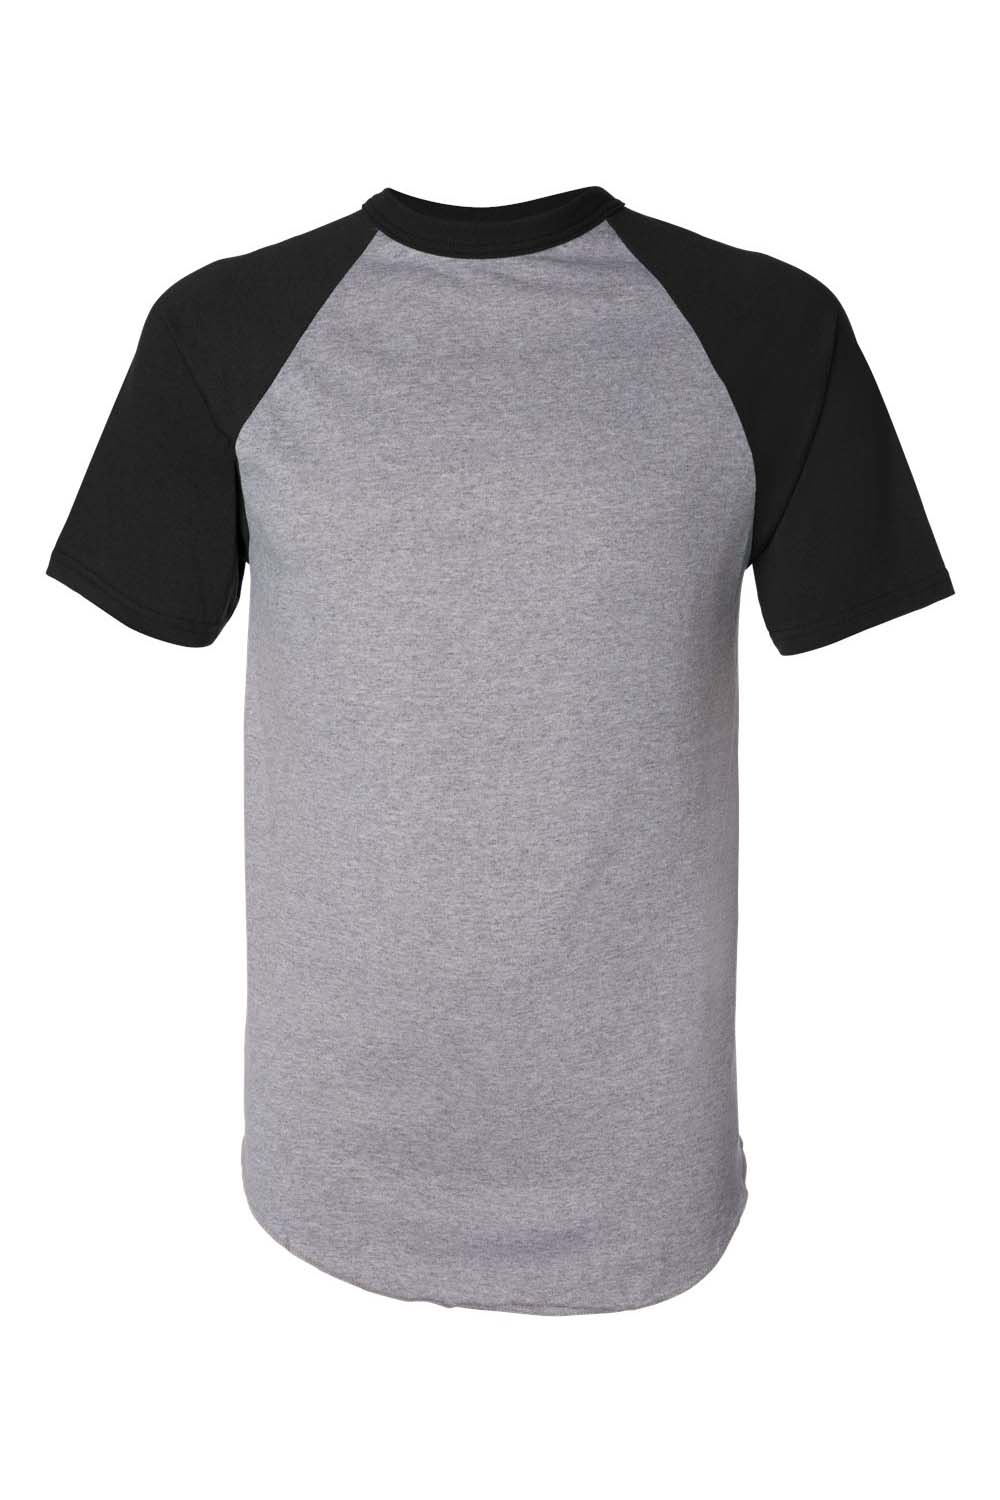 Augusta Sportswear 423 Mens Short Sleeve Crewneck T-Shirt Heather Grey/Black Model Flat Front